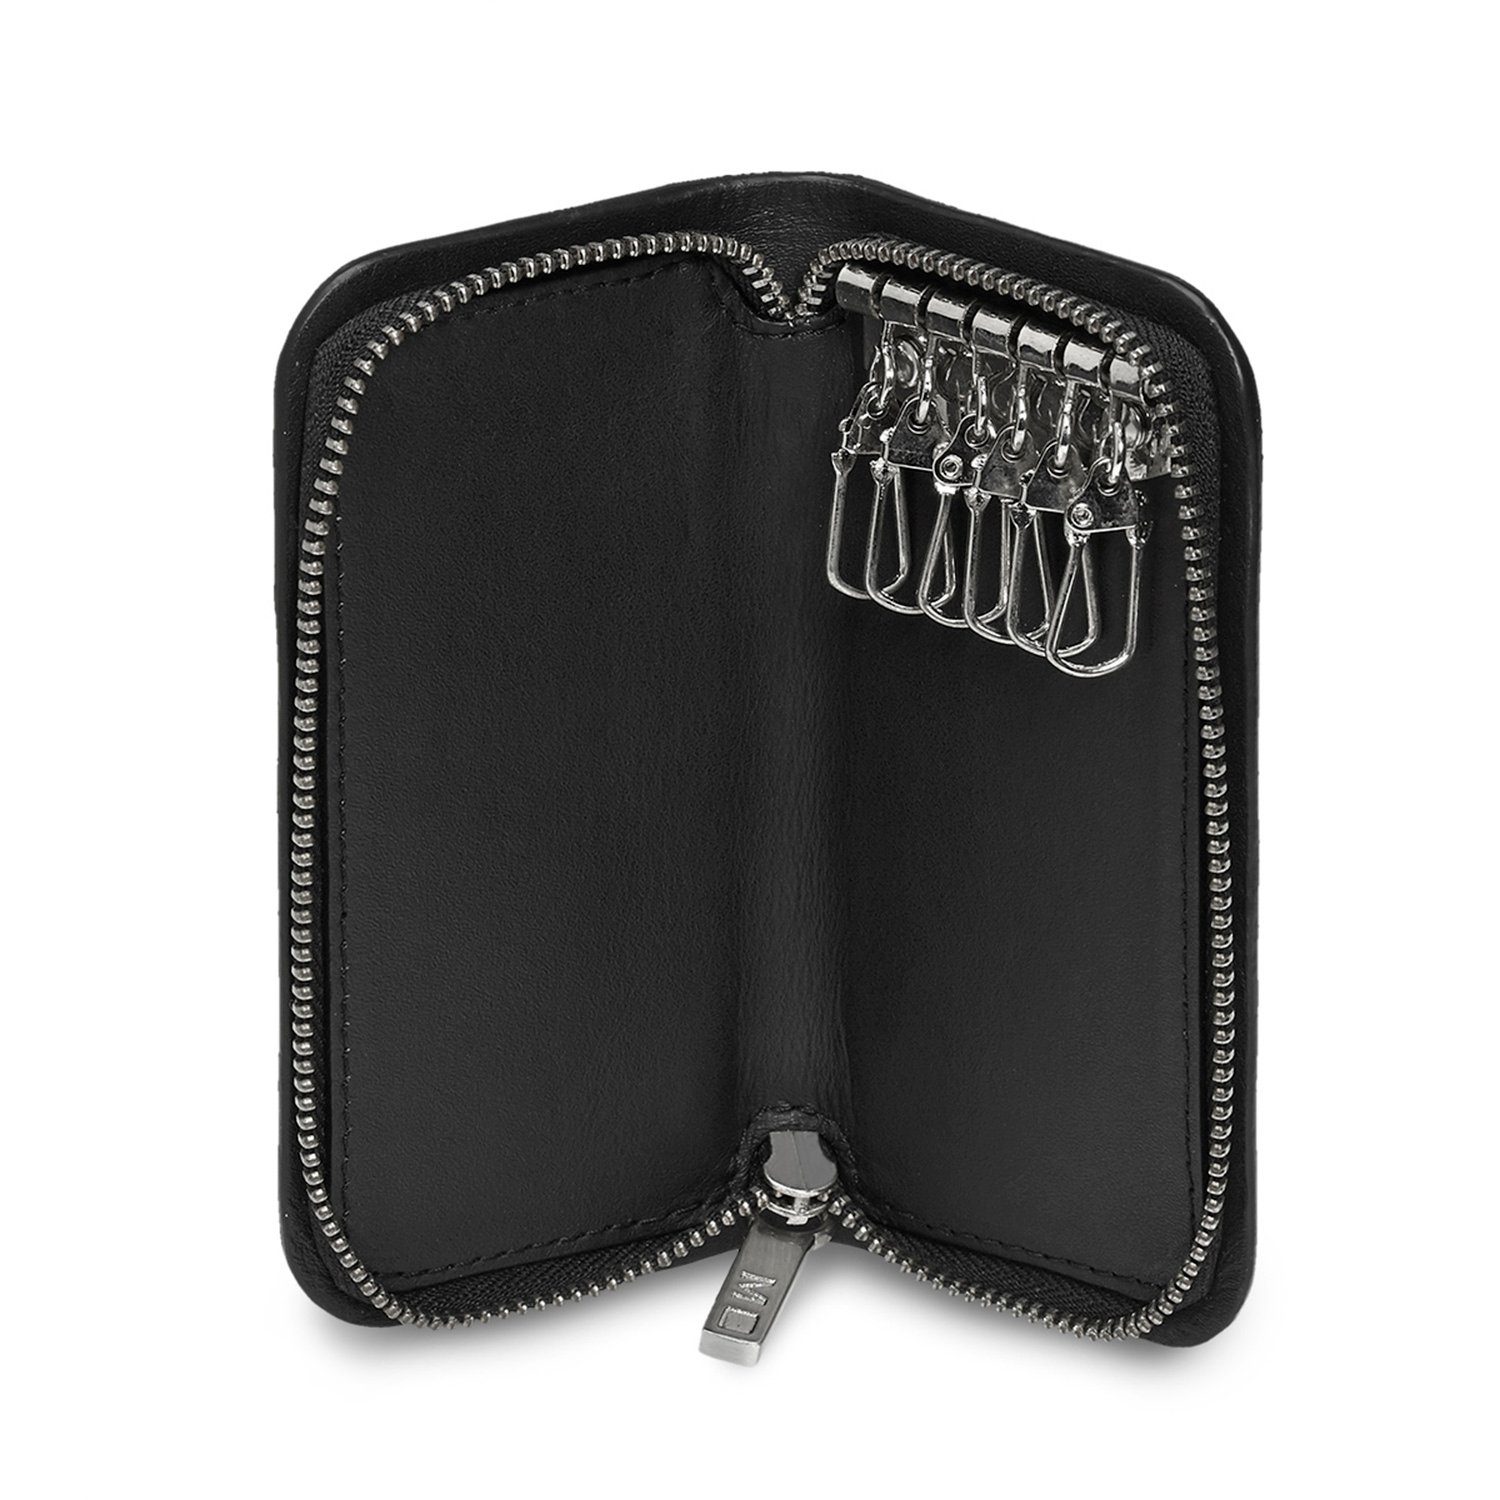 MOLESKINE Leather Etui, Schlüsseletui Schwarz - Classic